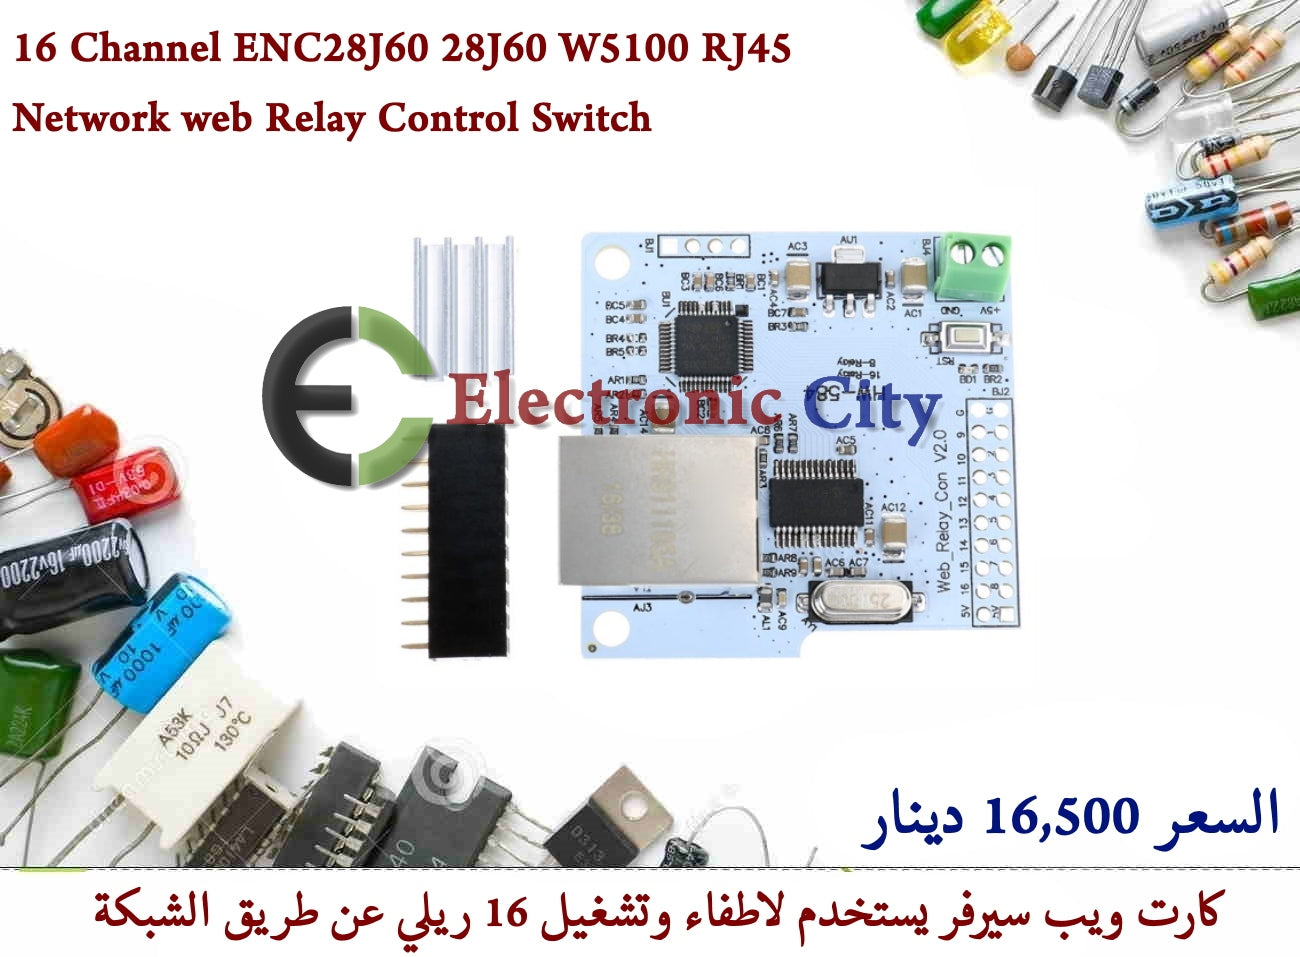 16 Channel ENC28J60 28J60 W5100 RJ45 Network web Relay Control Switch